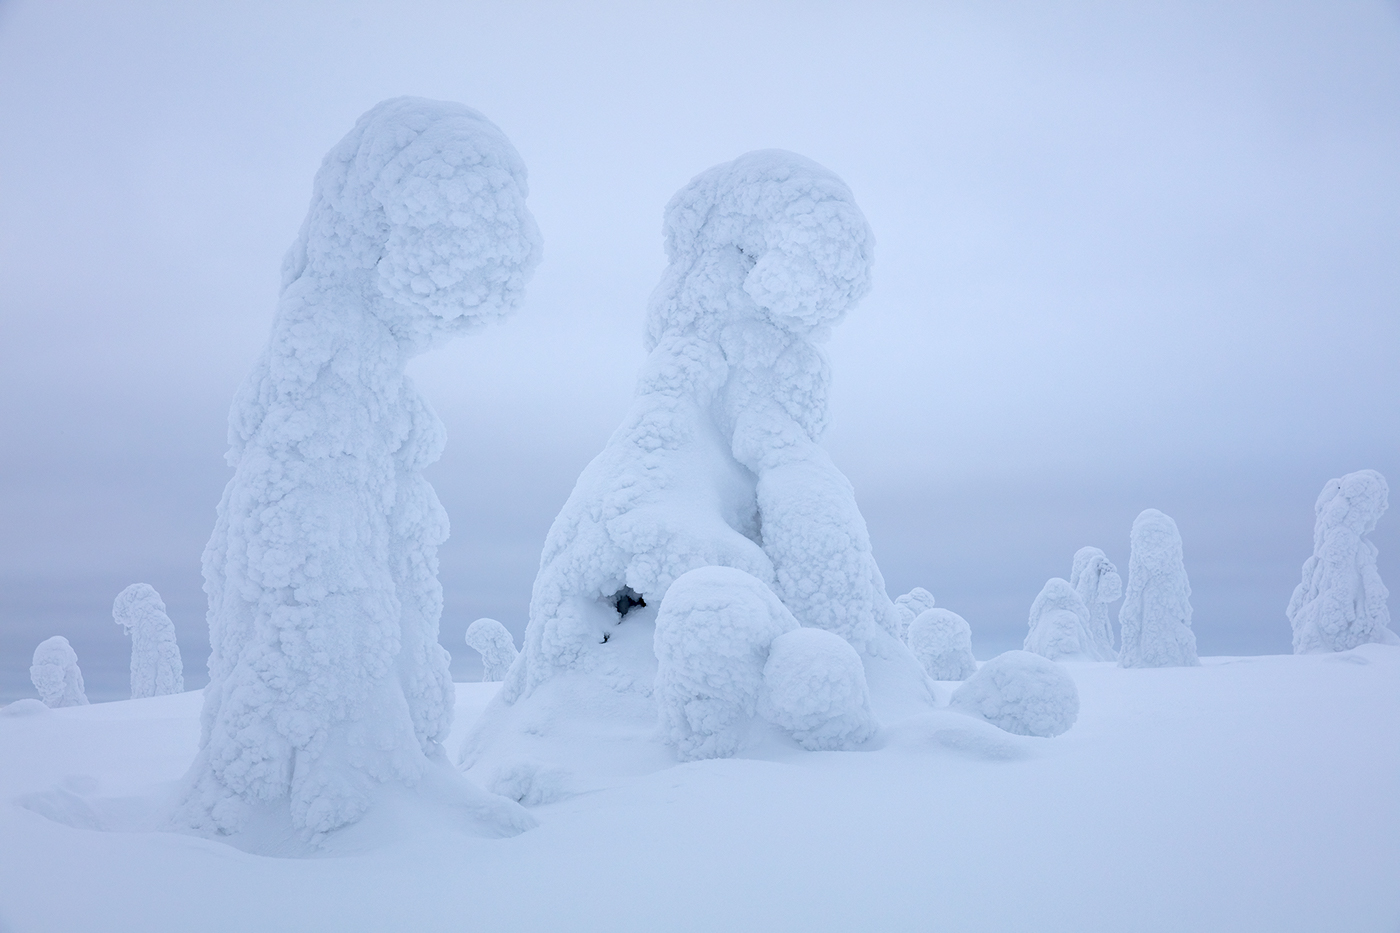 winter finland Lapland snow trees Arctic imagination fairytale Wizards rissitunturi